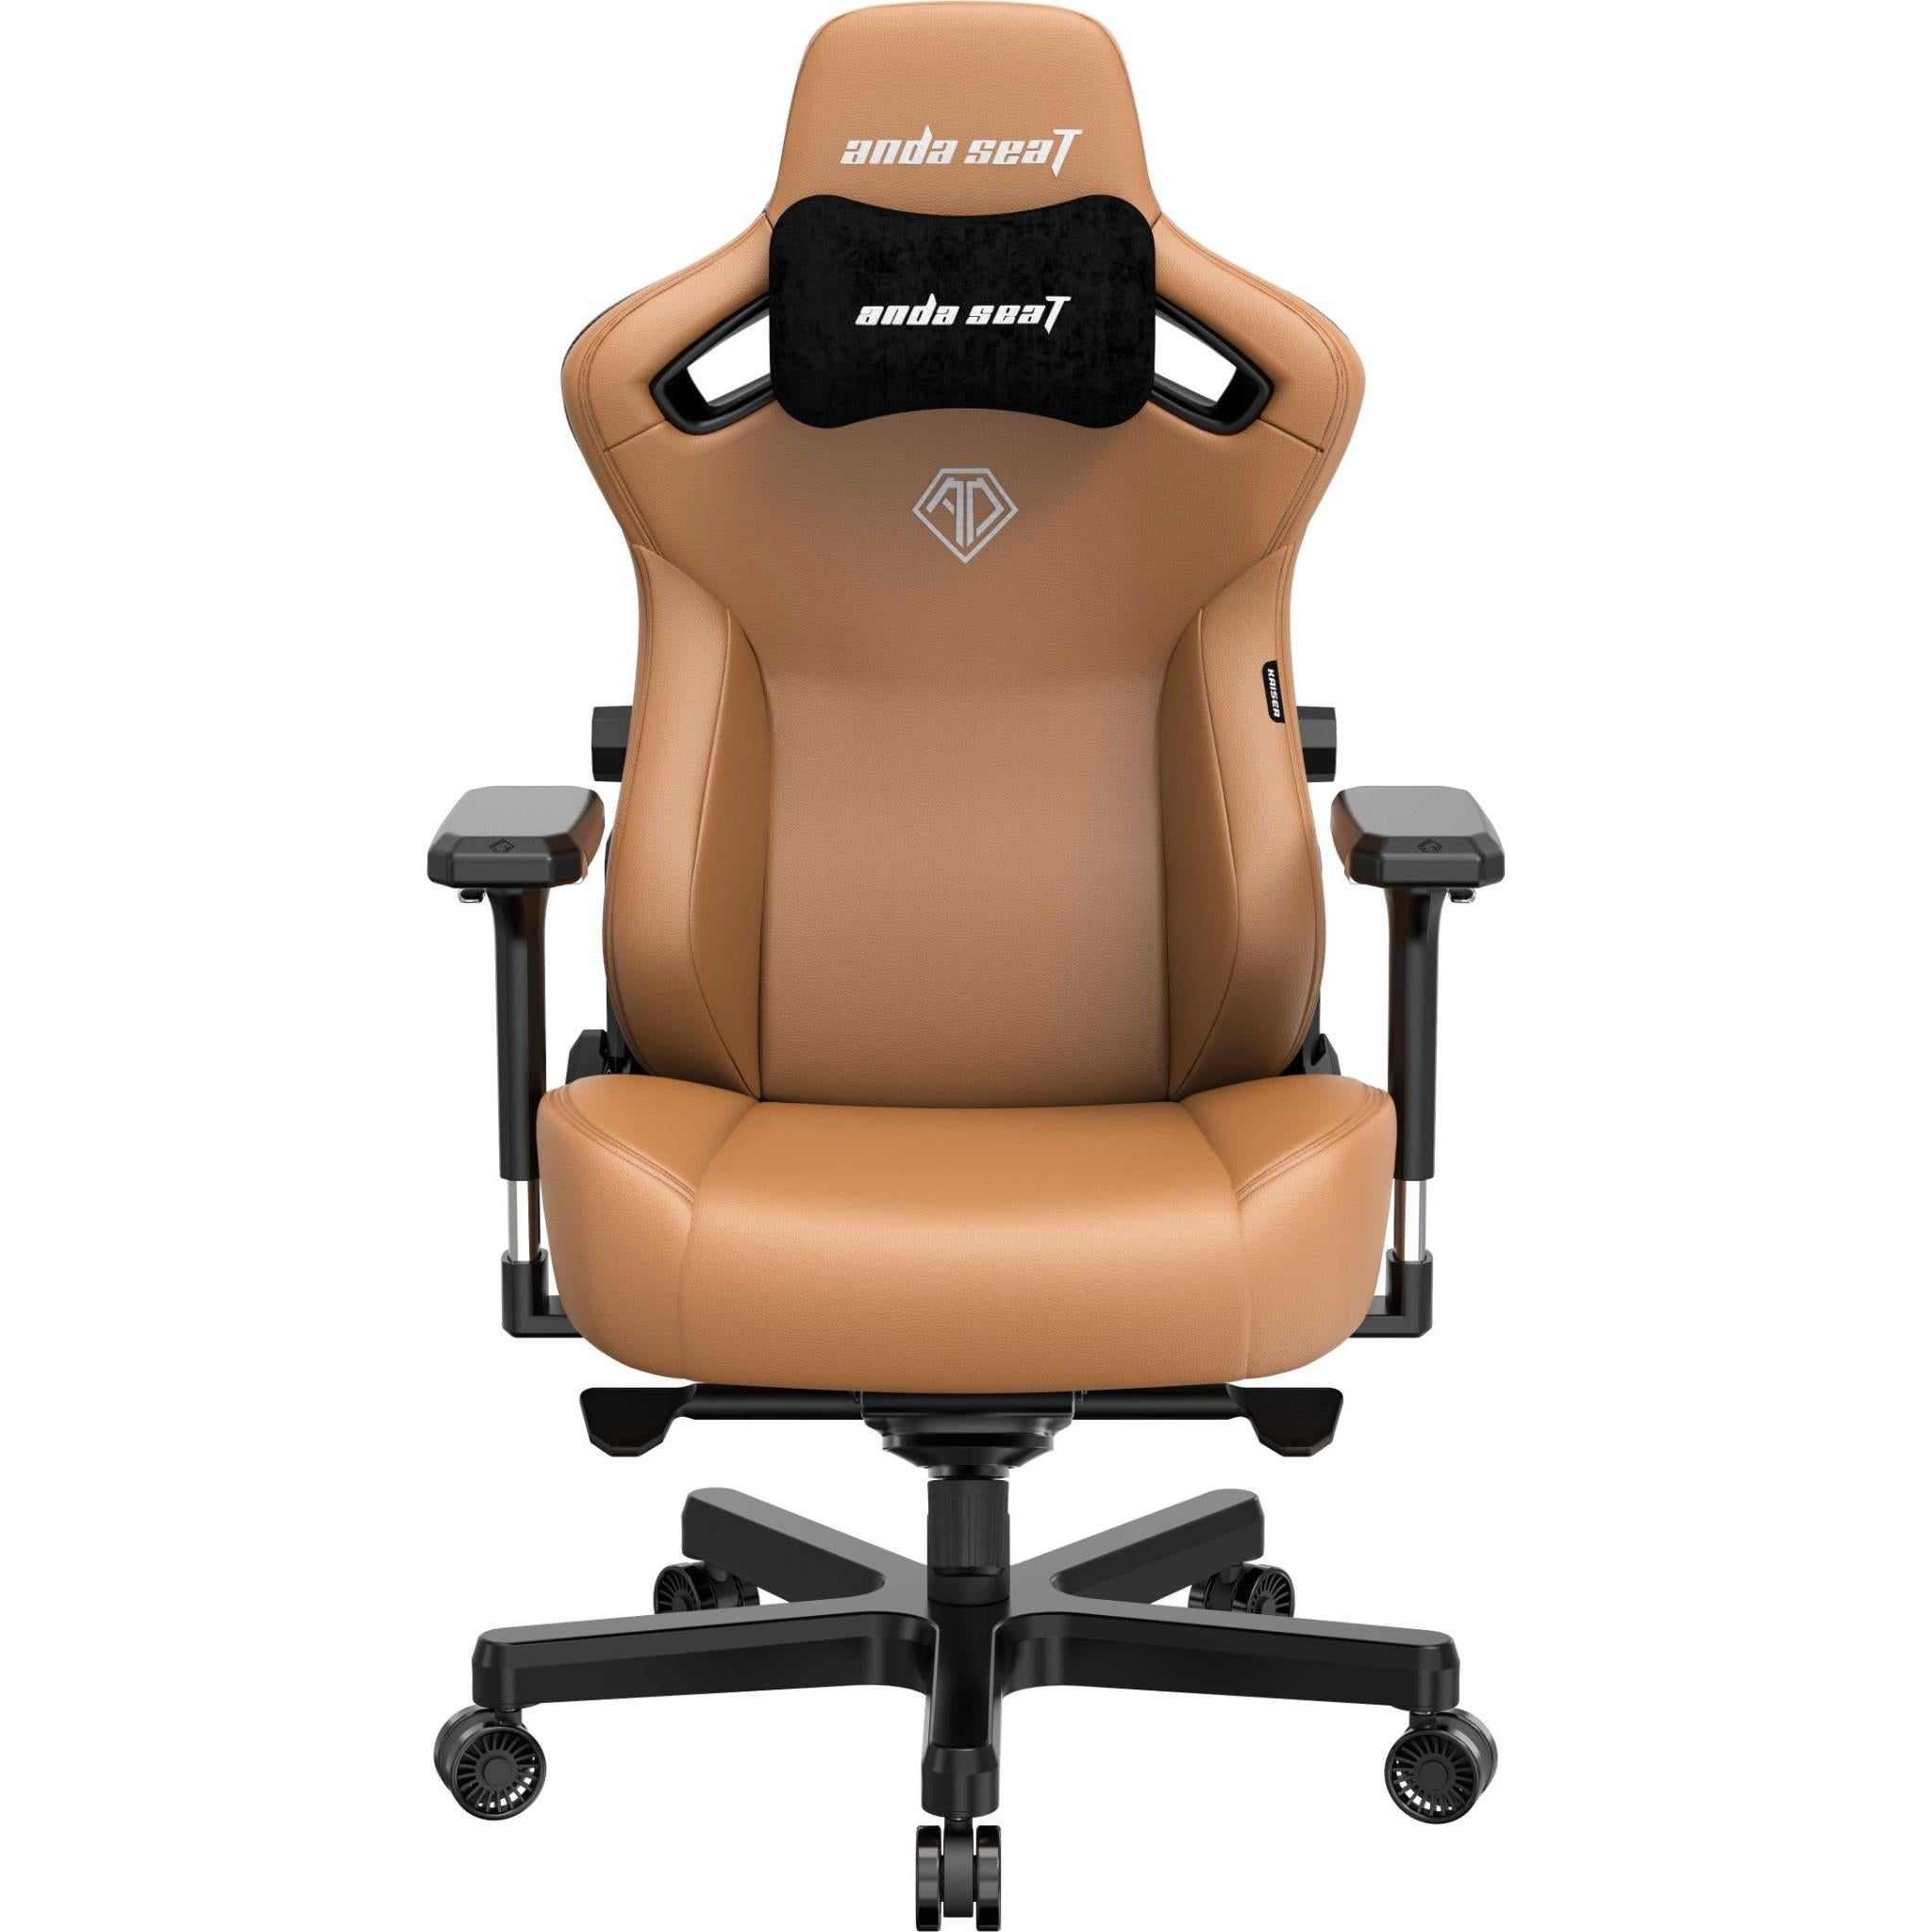 anda seat kaiser 3 series premium gaming chair brown (xl)